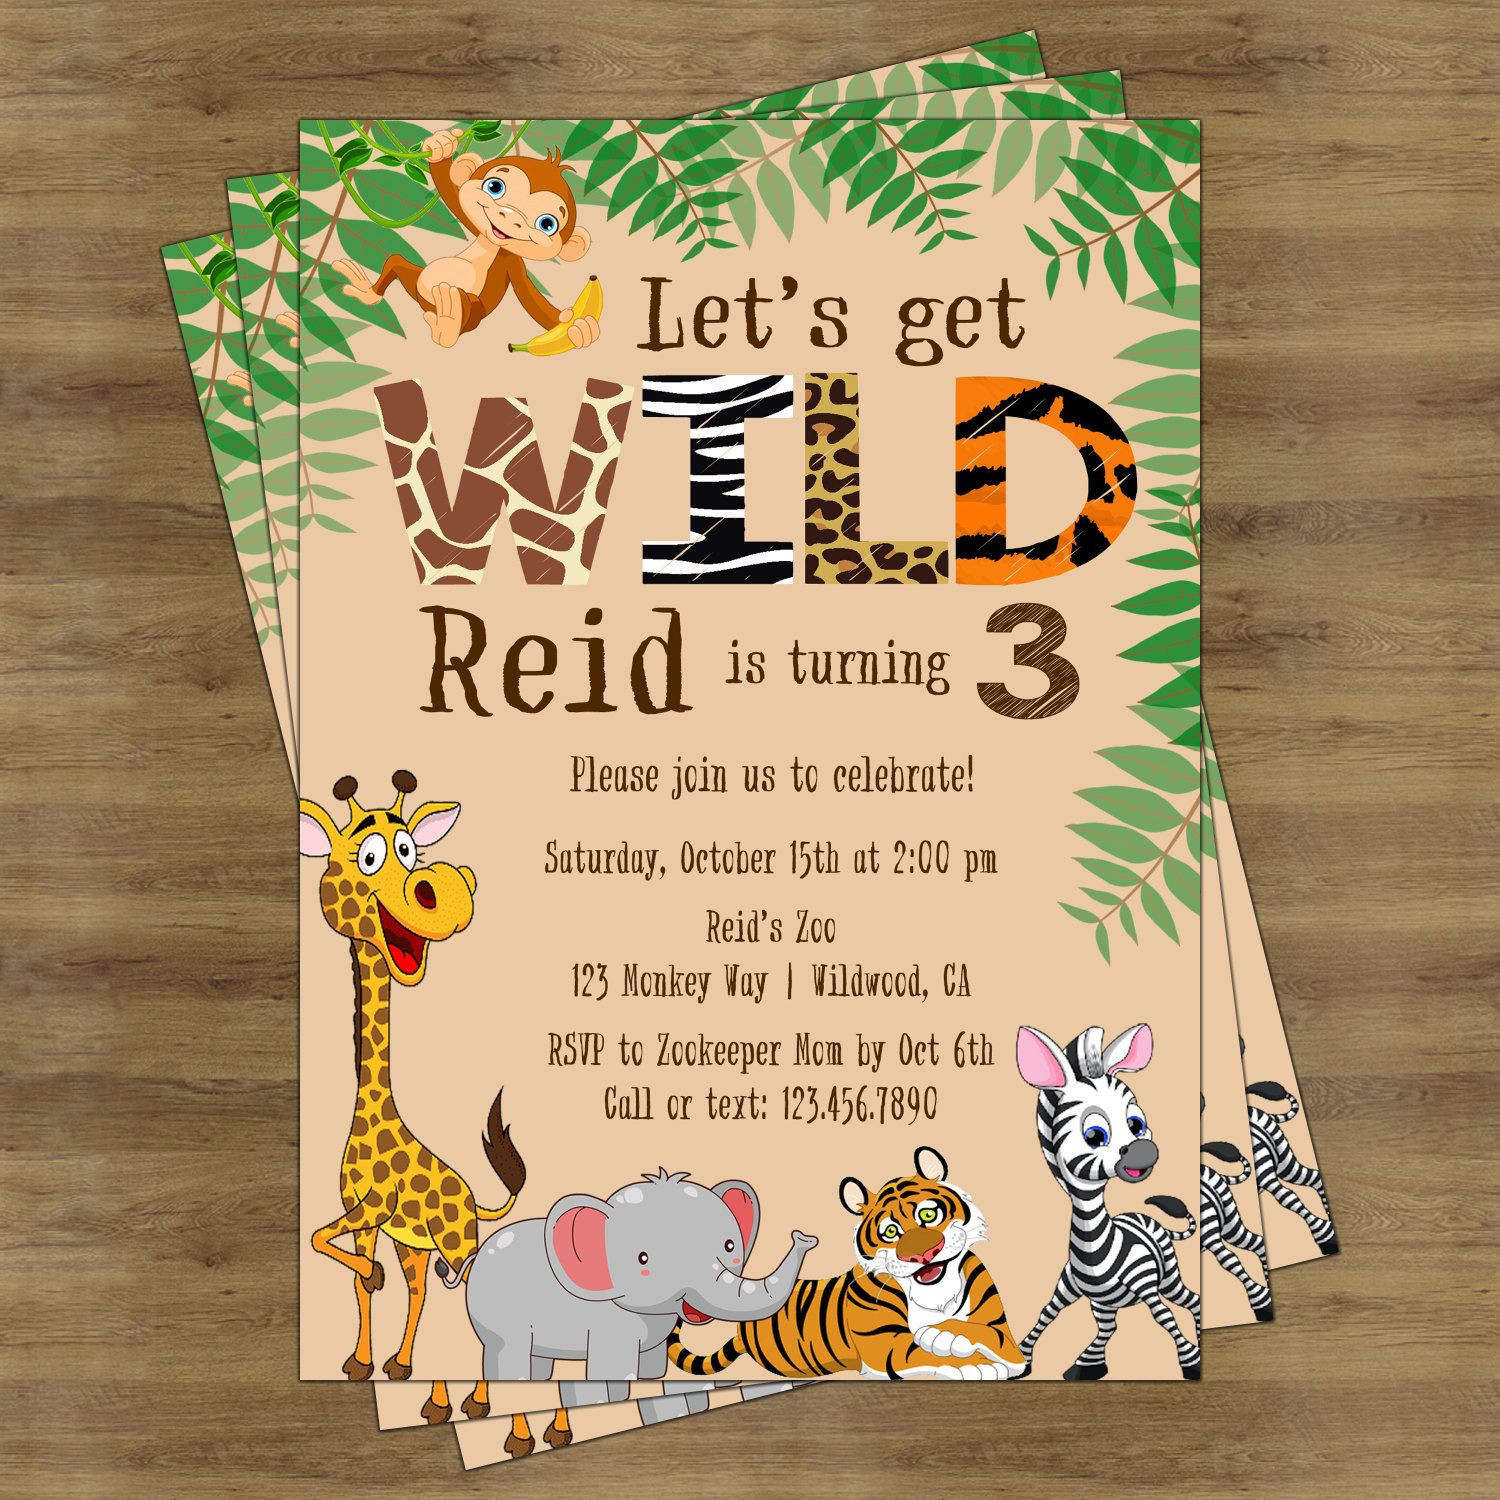 Best ideas about Animal Birthday Invitations
. Save or Pin Zoo Birthday Invitation Safari Birthday Invitation Now.